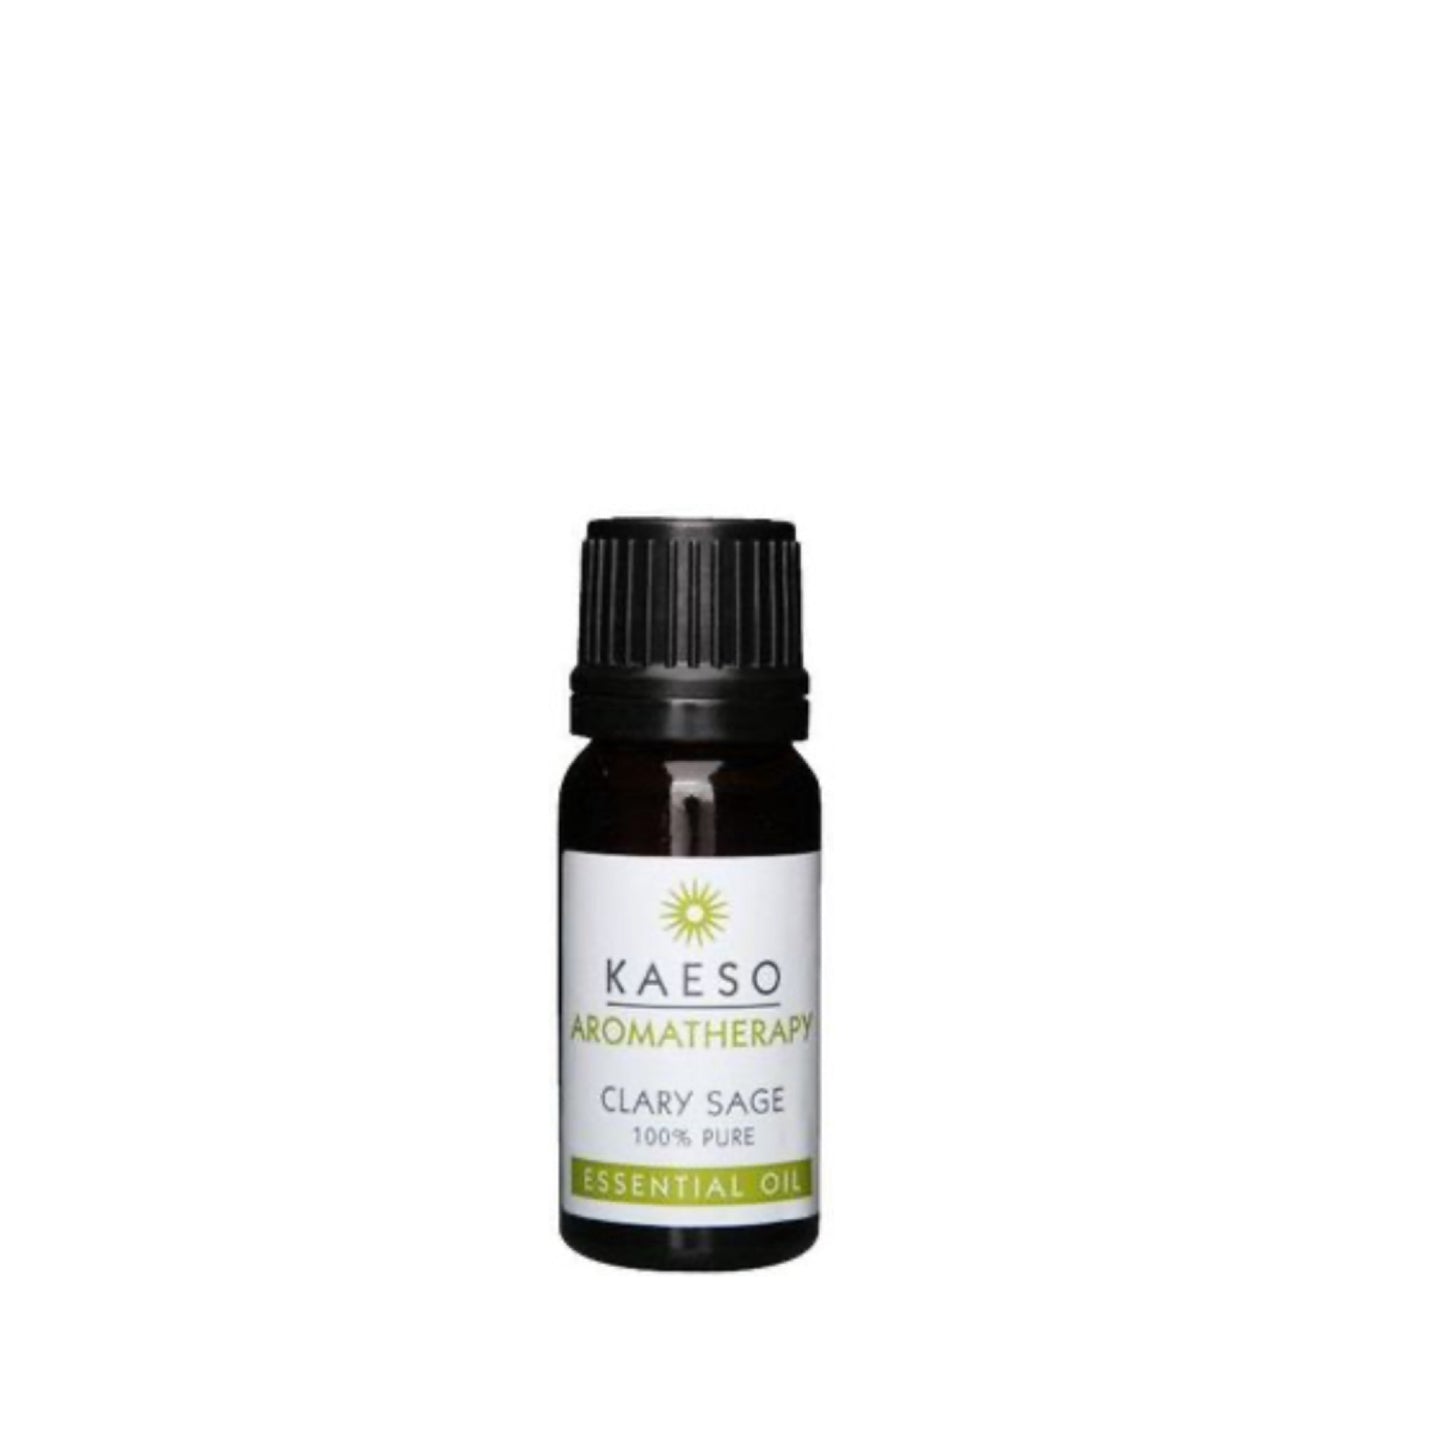 Kaeso Aromatherapy - Clary Sage Essential Oil (10ml)